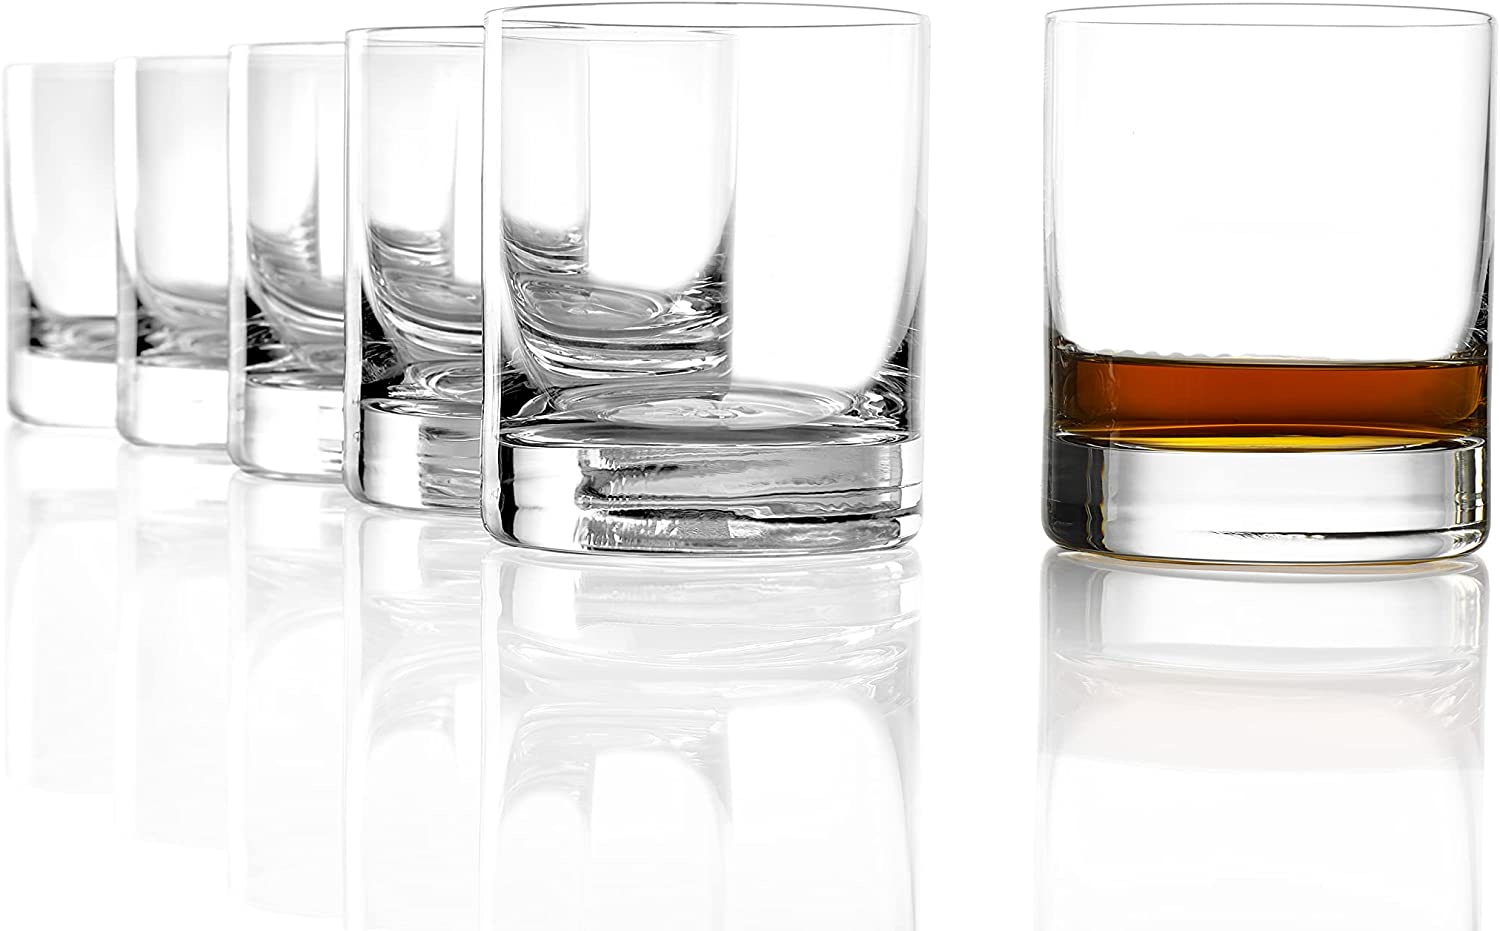 STÖLZLE LAUSITZ Glasses 420 ml I Whisky Glasses D.O.F. from the New York Bar Series I Set of 6 Large Whisky Glasses I Made of Lead-Free Crystal Glass I Glasses Set Shatter-Resistant and Dishwasher Safe